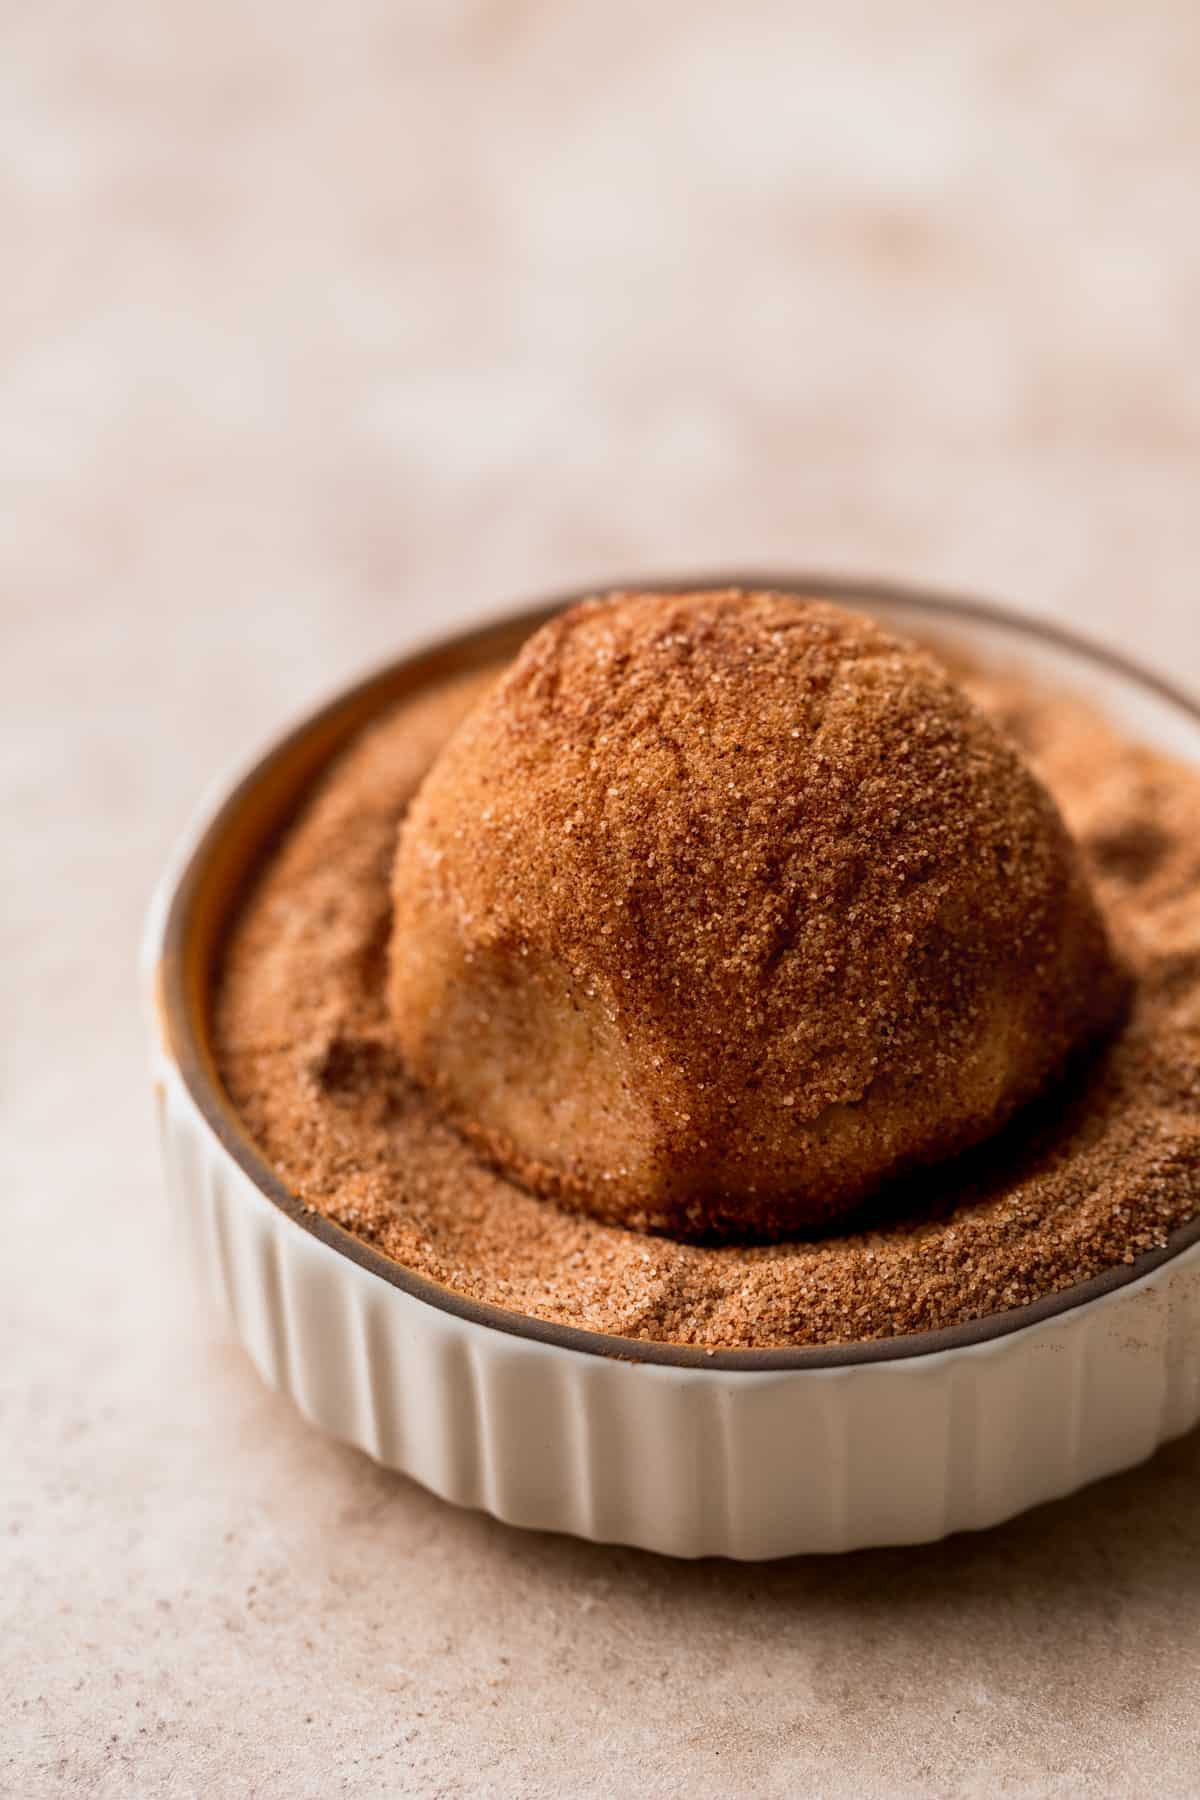 Cookie dough ball covered in cinnamon sugar.